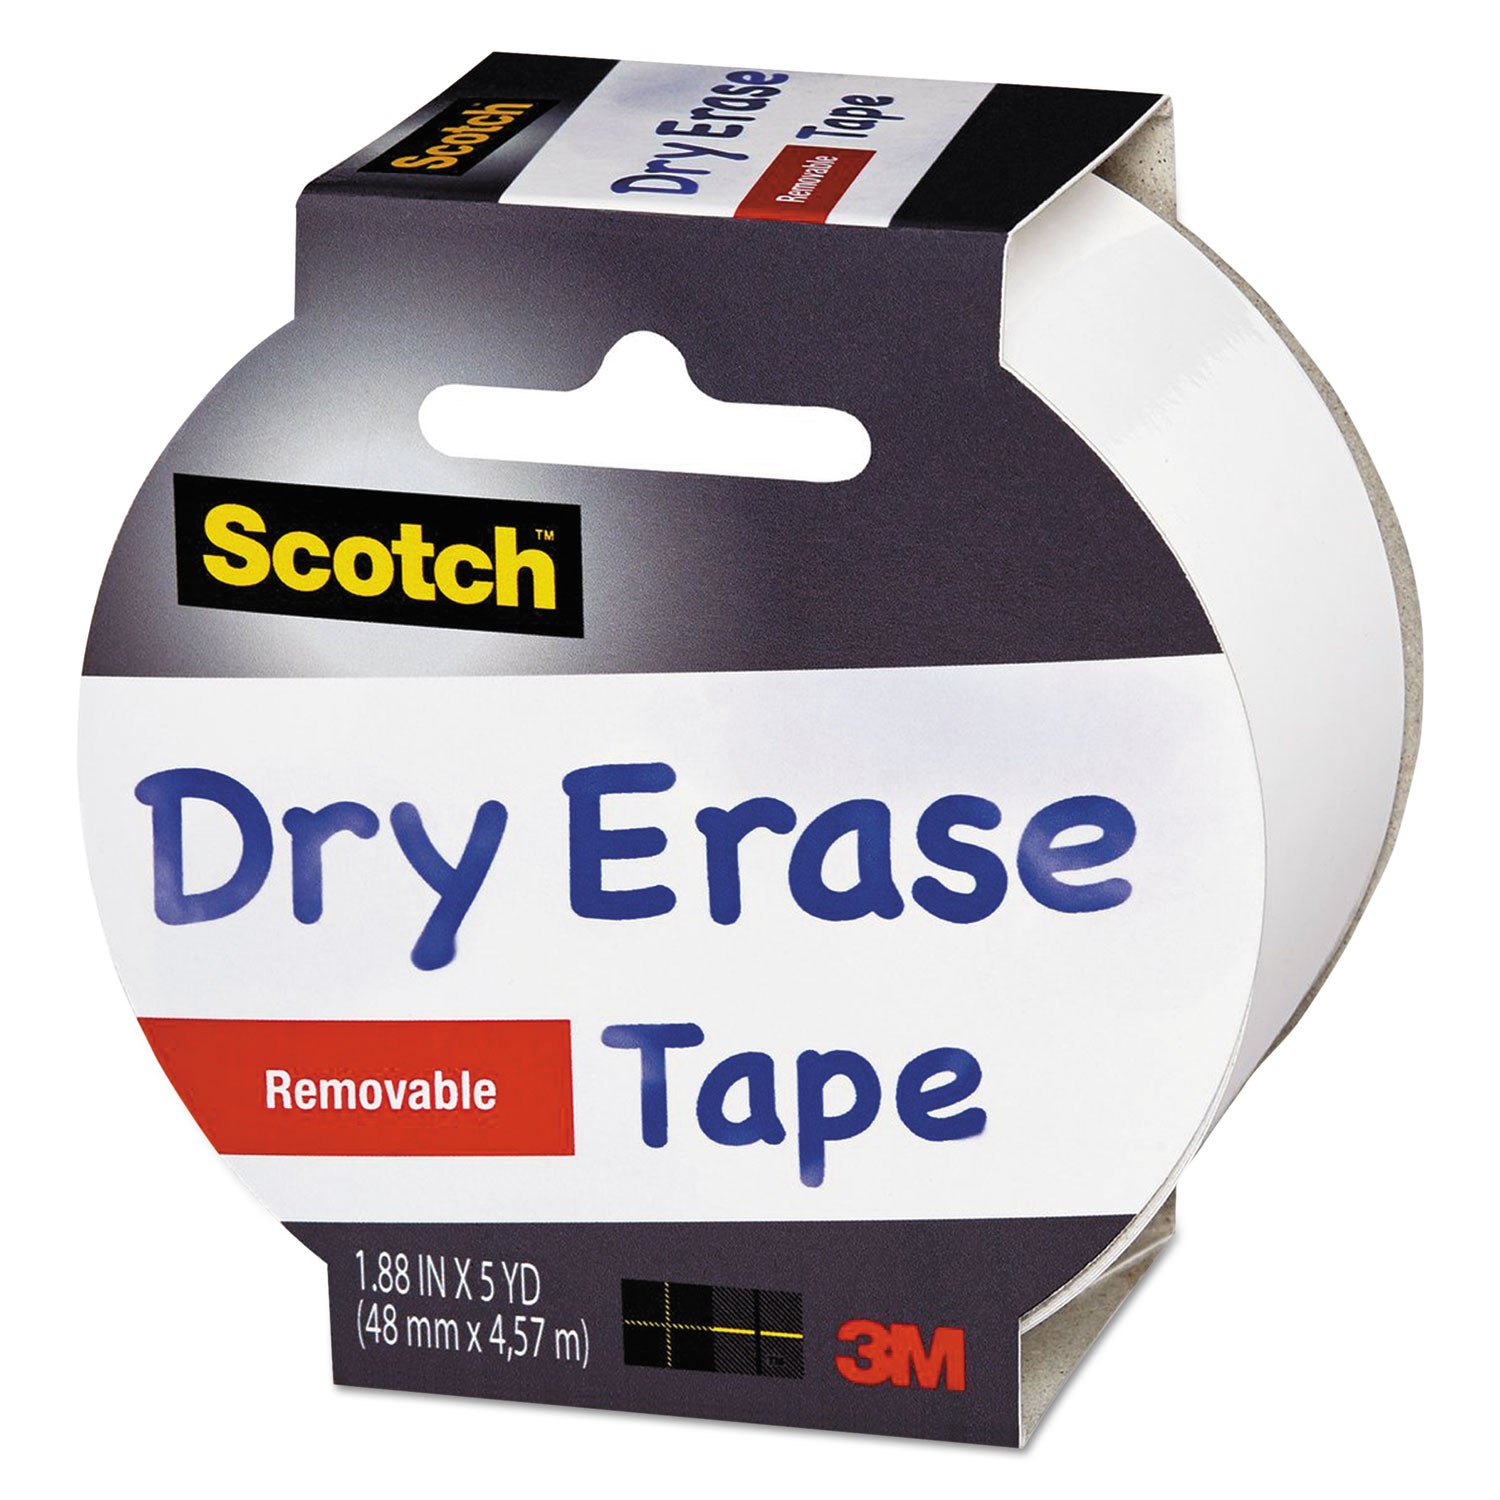 Dry Erase Tape, 3" Core, 1.88" x 5 yds, White - 